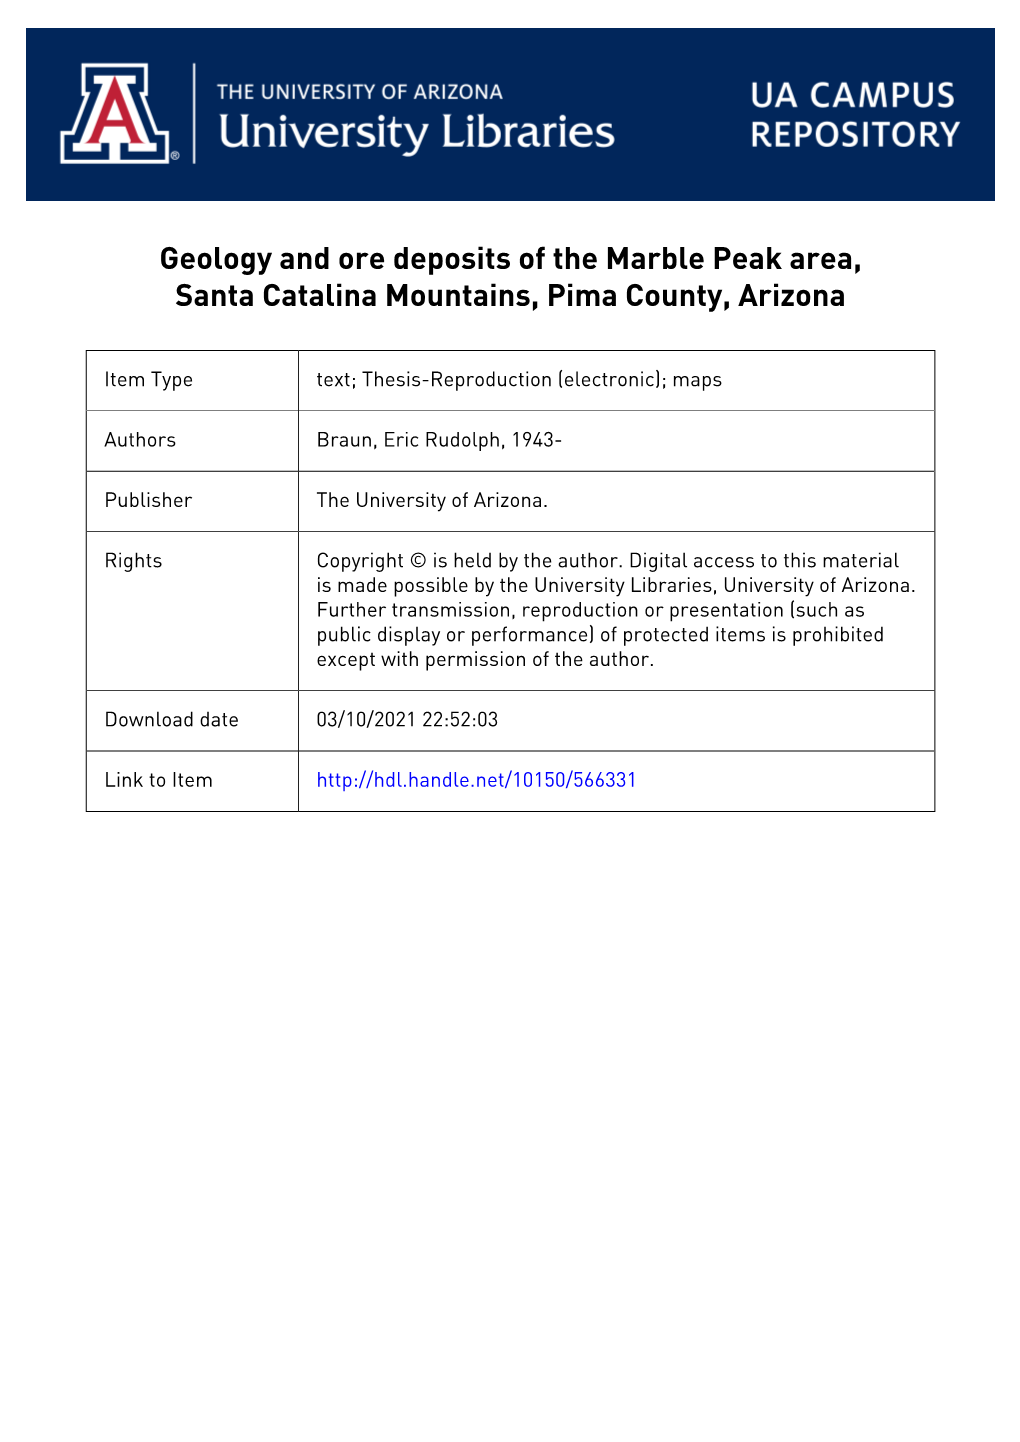 Geology and Ore Deposits of the Marble Peak Area, Santa Catalina Mountains, Pima County, Arizona